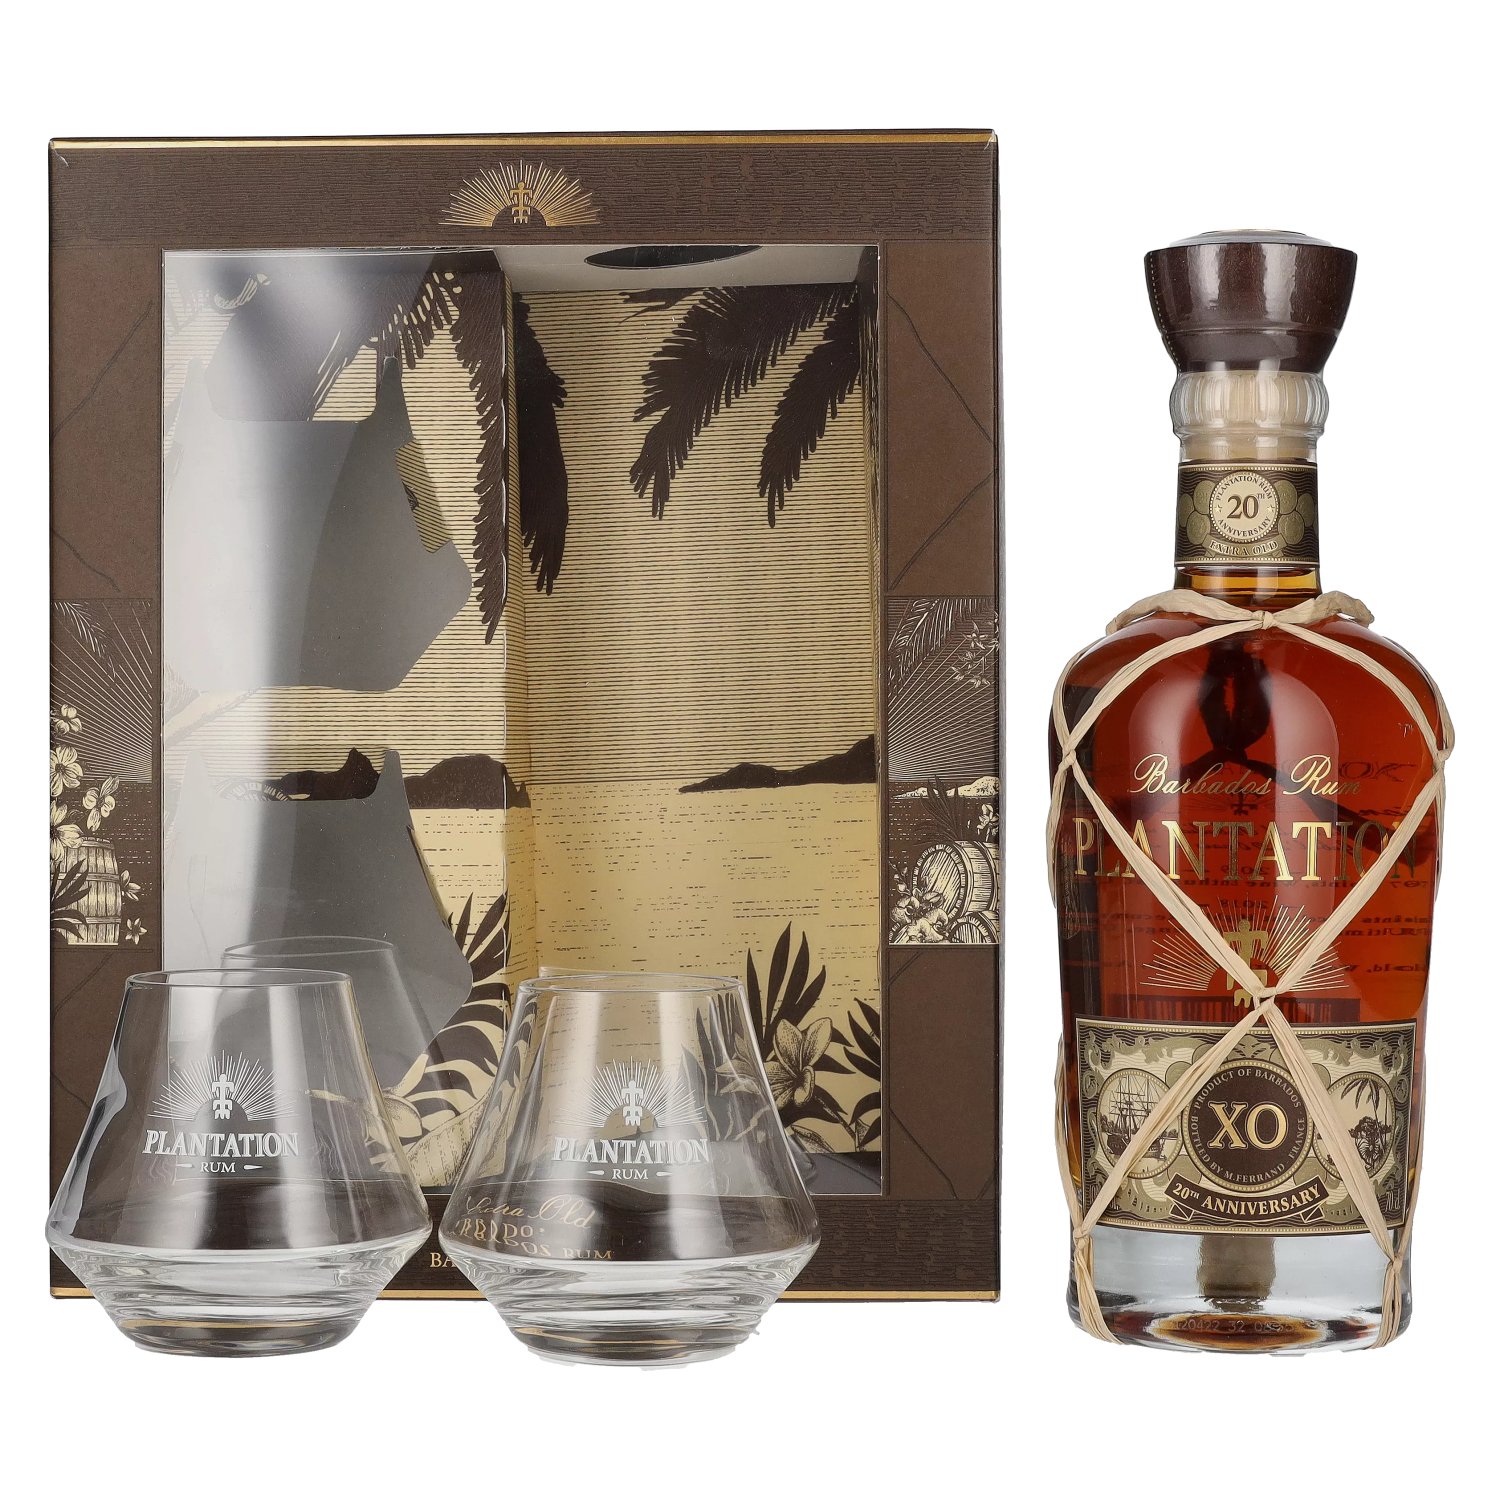 Plantation Rum glasses Vol. 20th with Giftbox BARBADOS in 40% XO Anniversary 2 0,7l